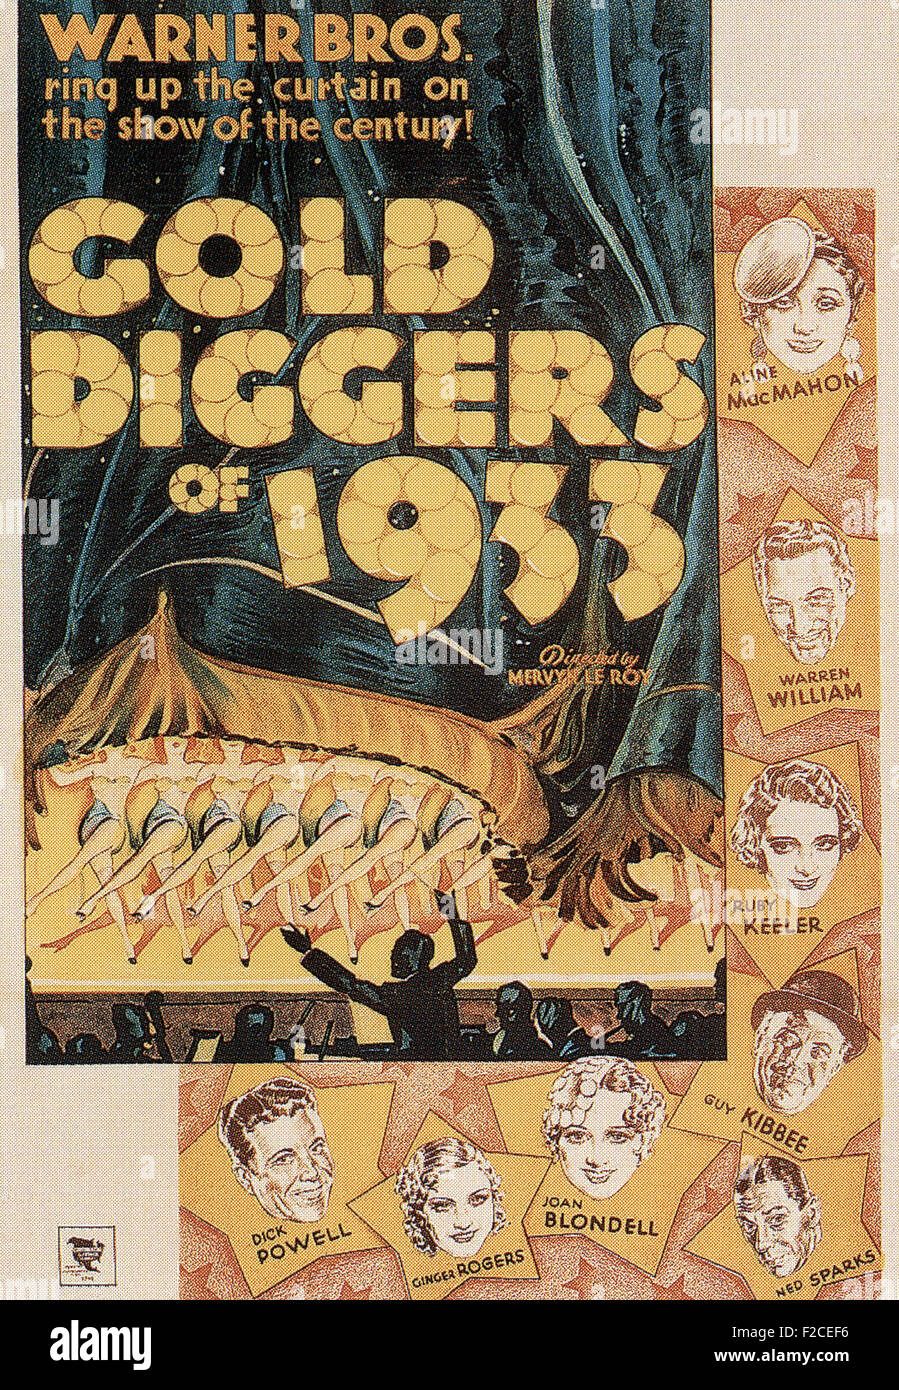 Gold Diggers: The Secret of Bear Mountain - Original Movie Poster